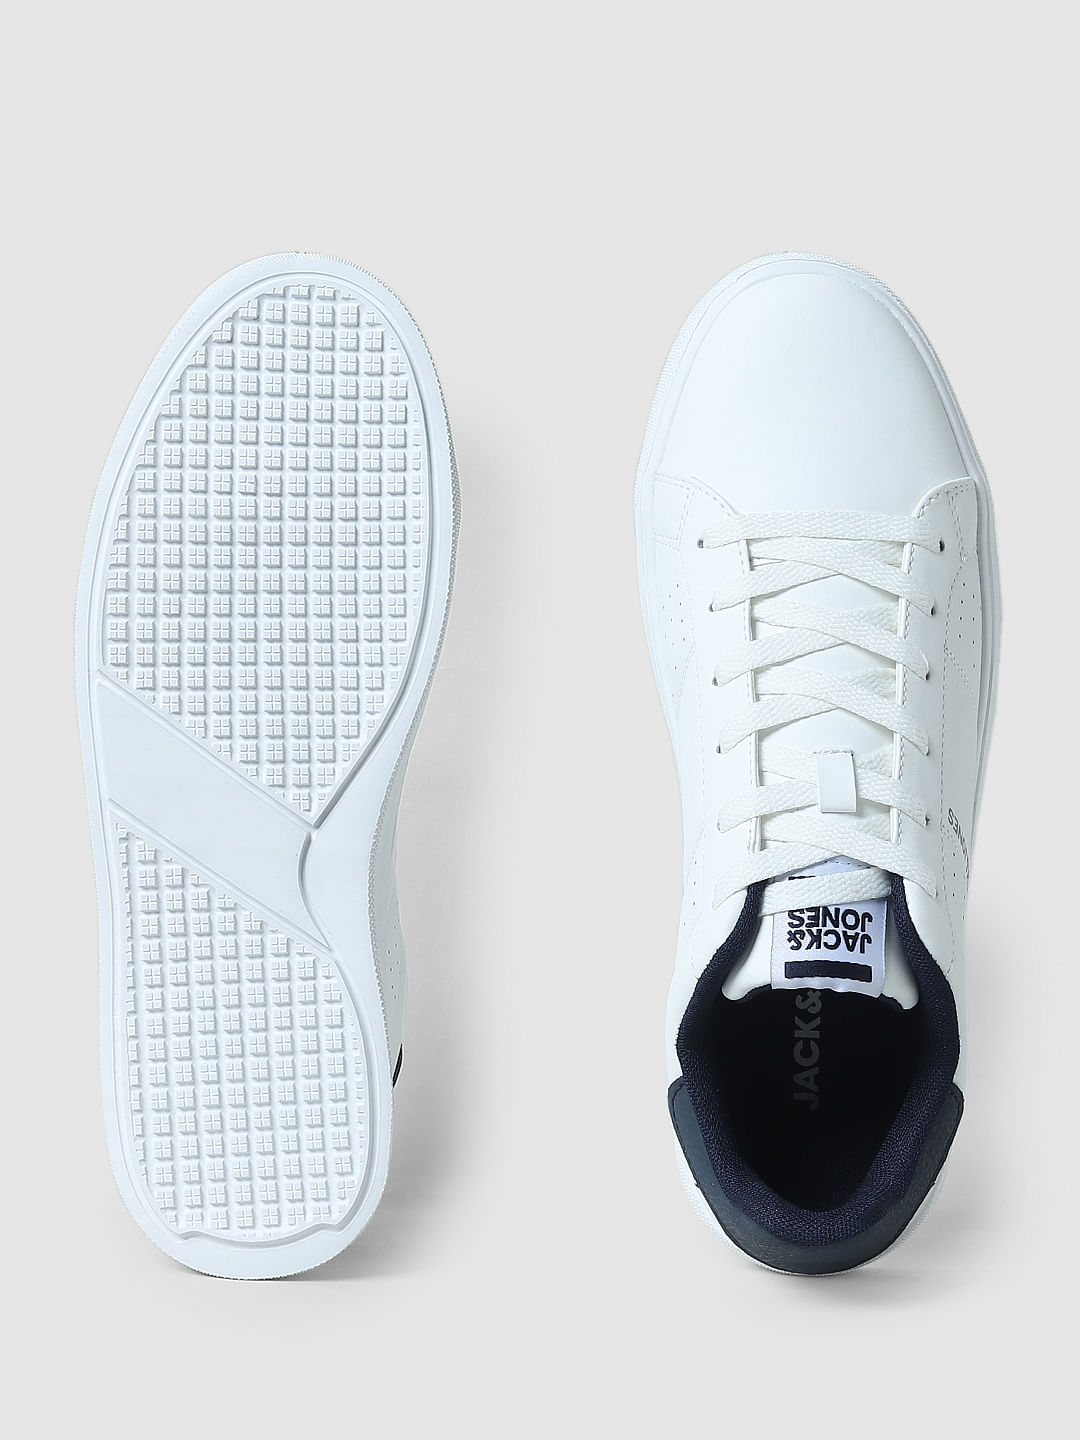 Adio Men's Hamilton Skate Shoe BLACK-WHITE-GUM - Walmart.com